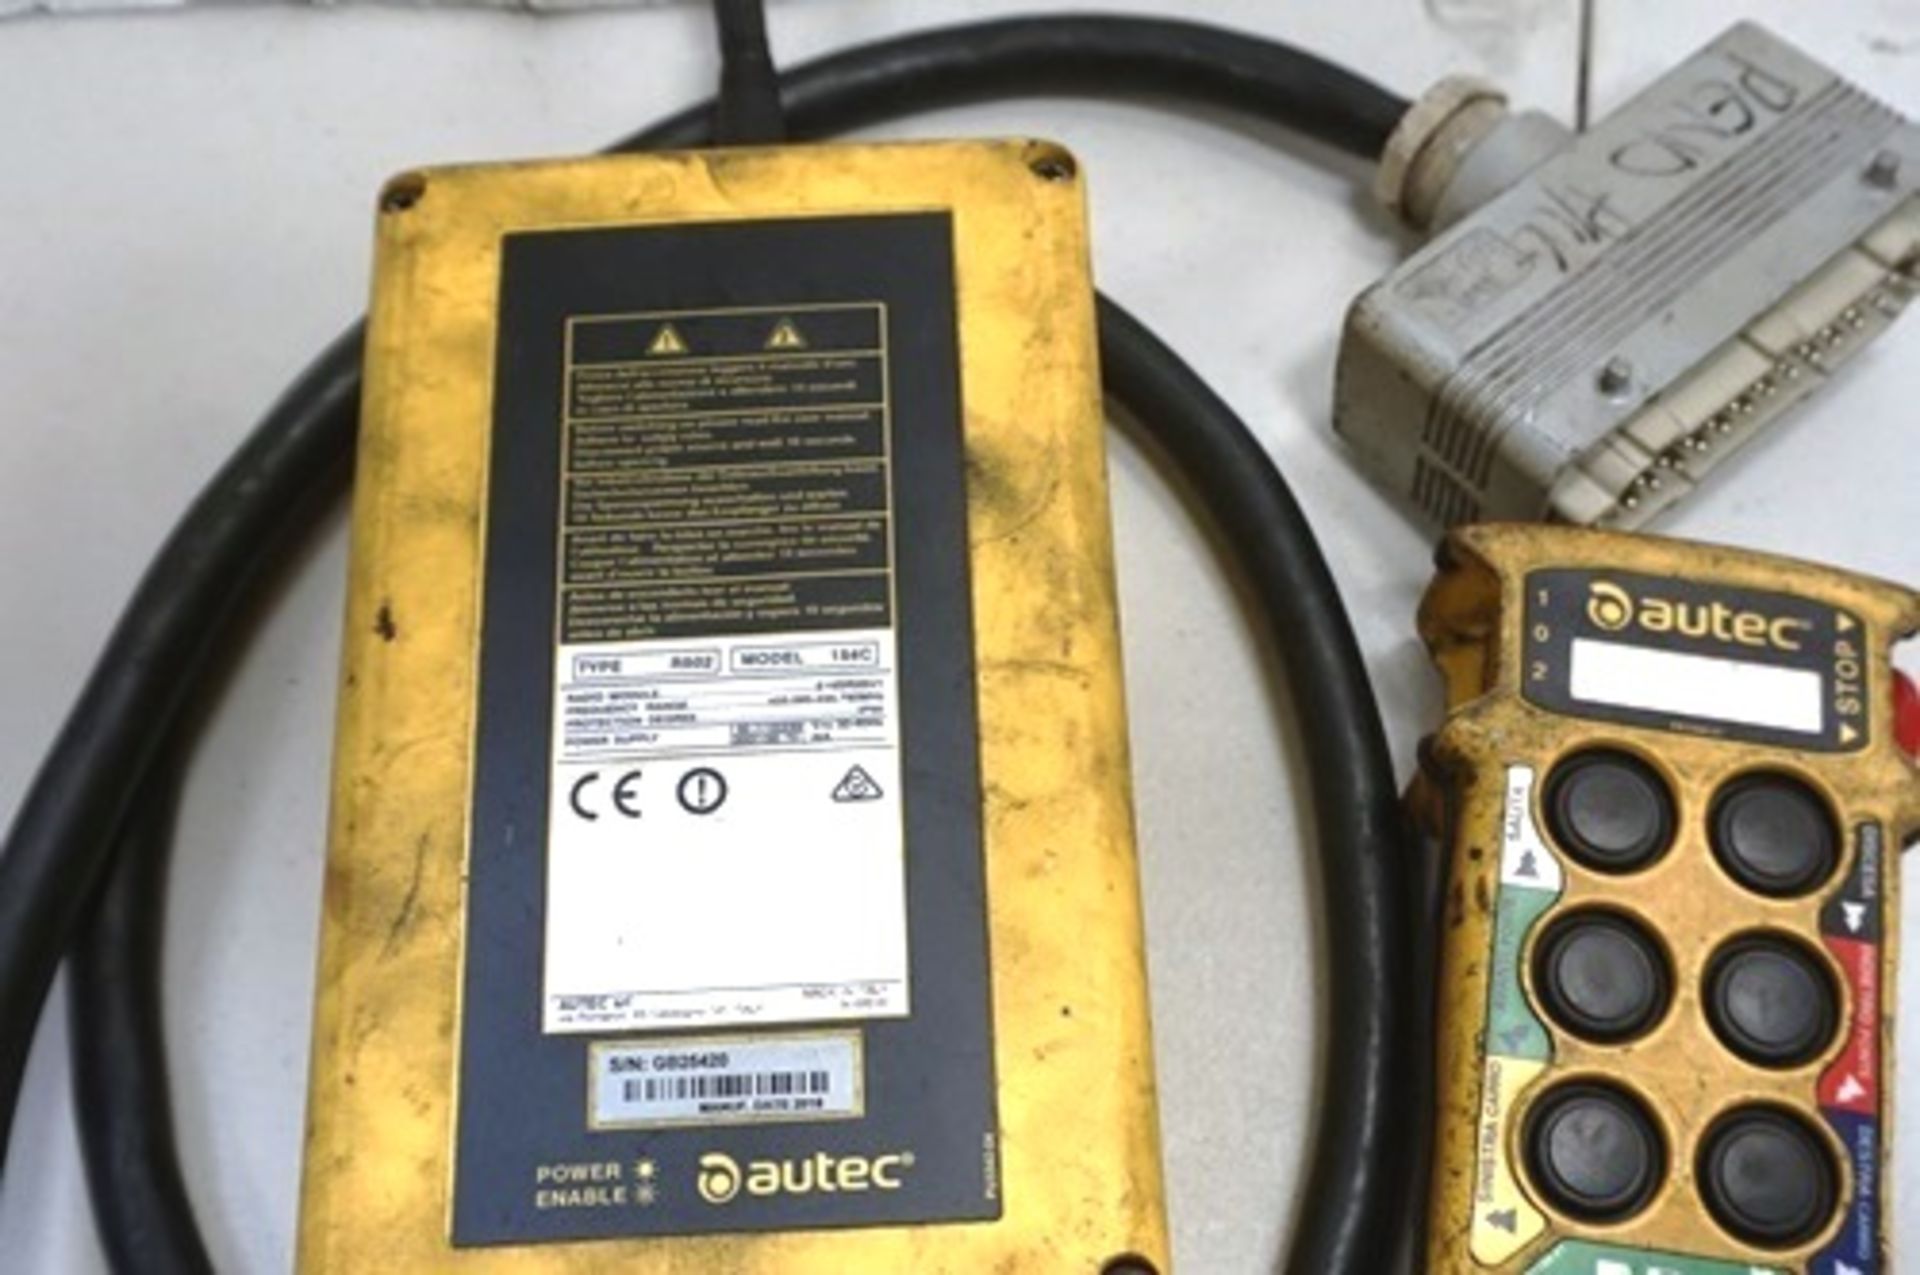 An Autec radio remote control unit, comprises receiver unit, controller, no battery, untested - - Image 2 of 5